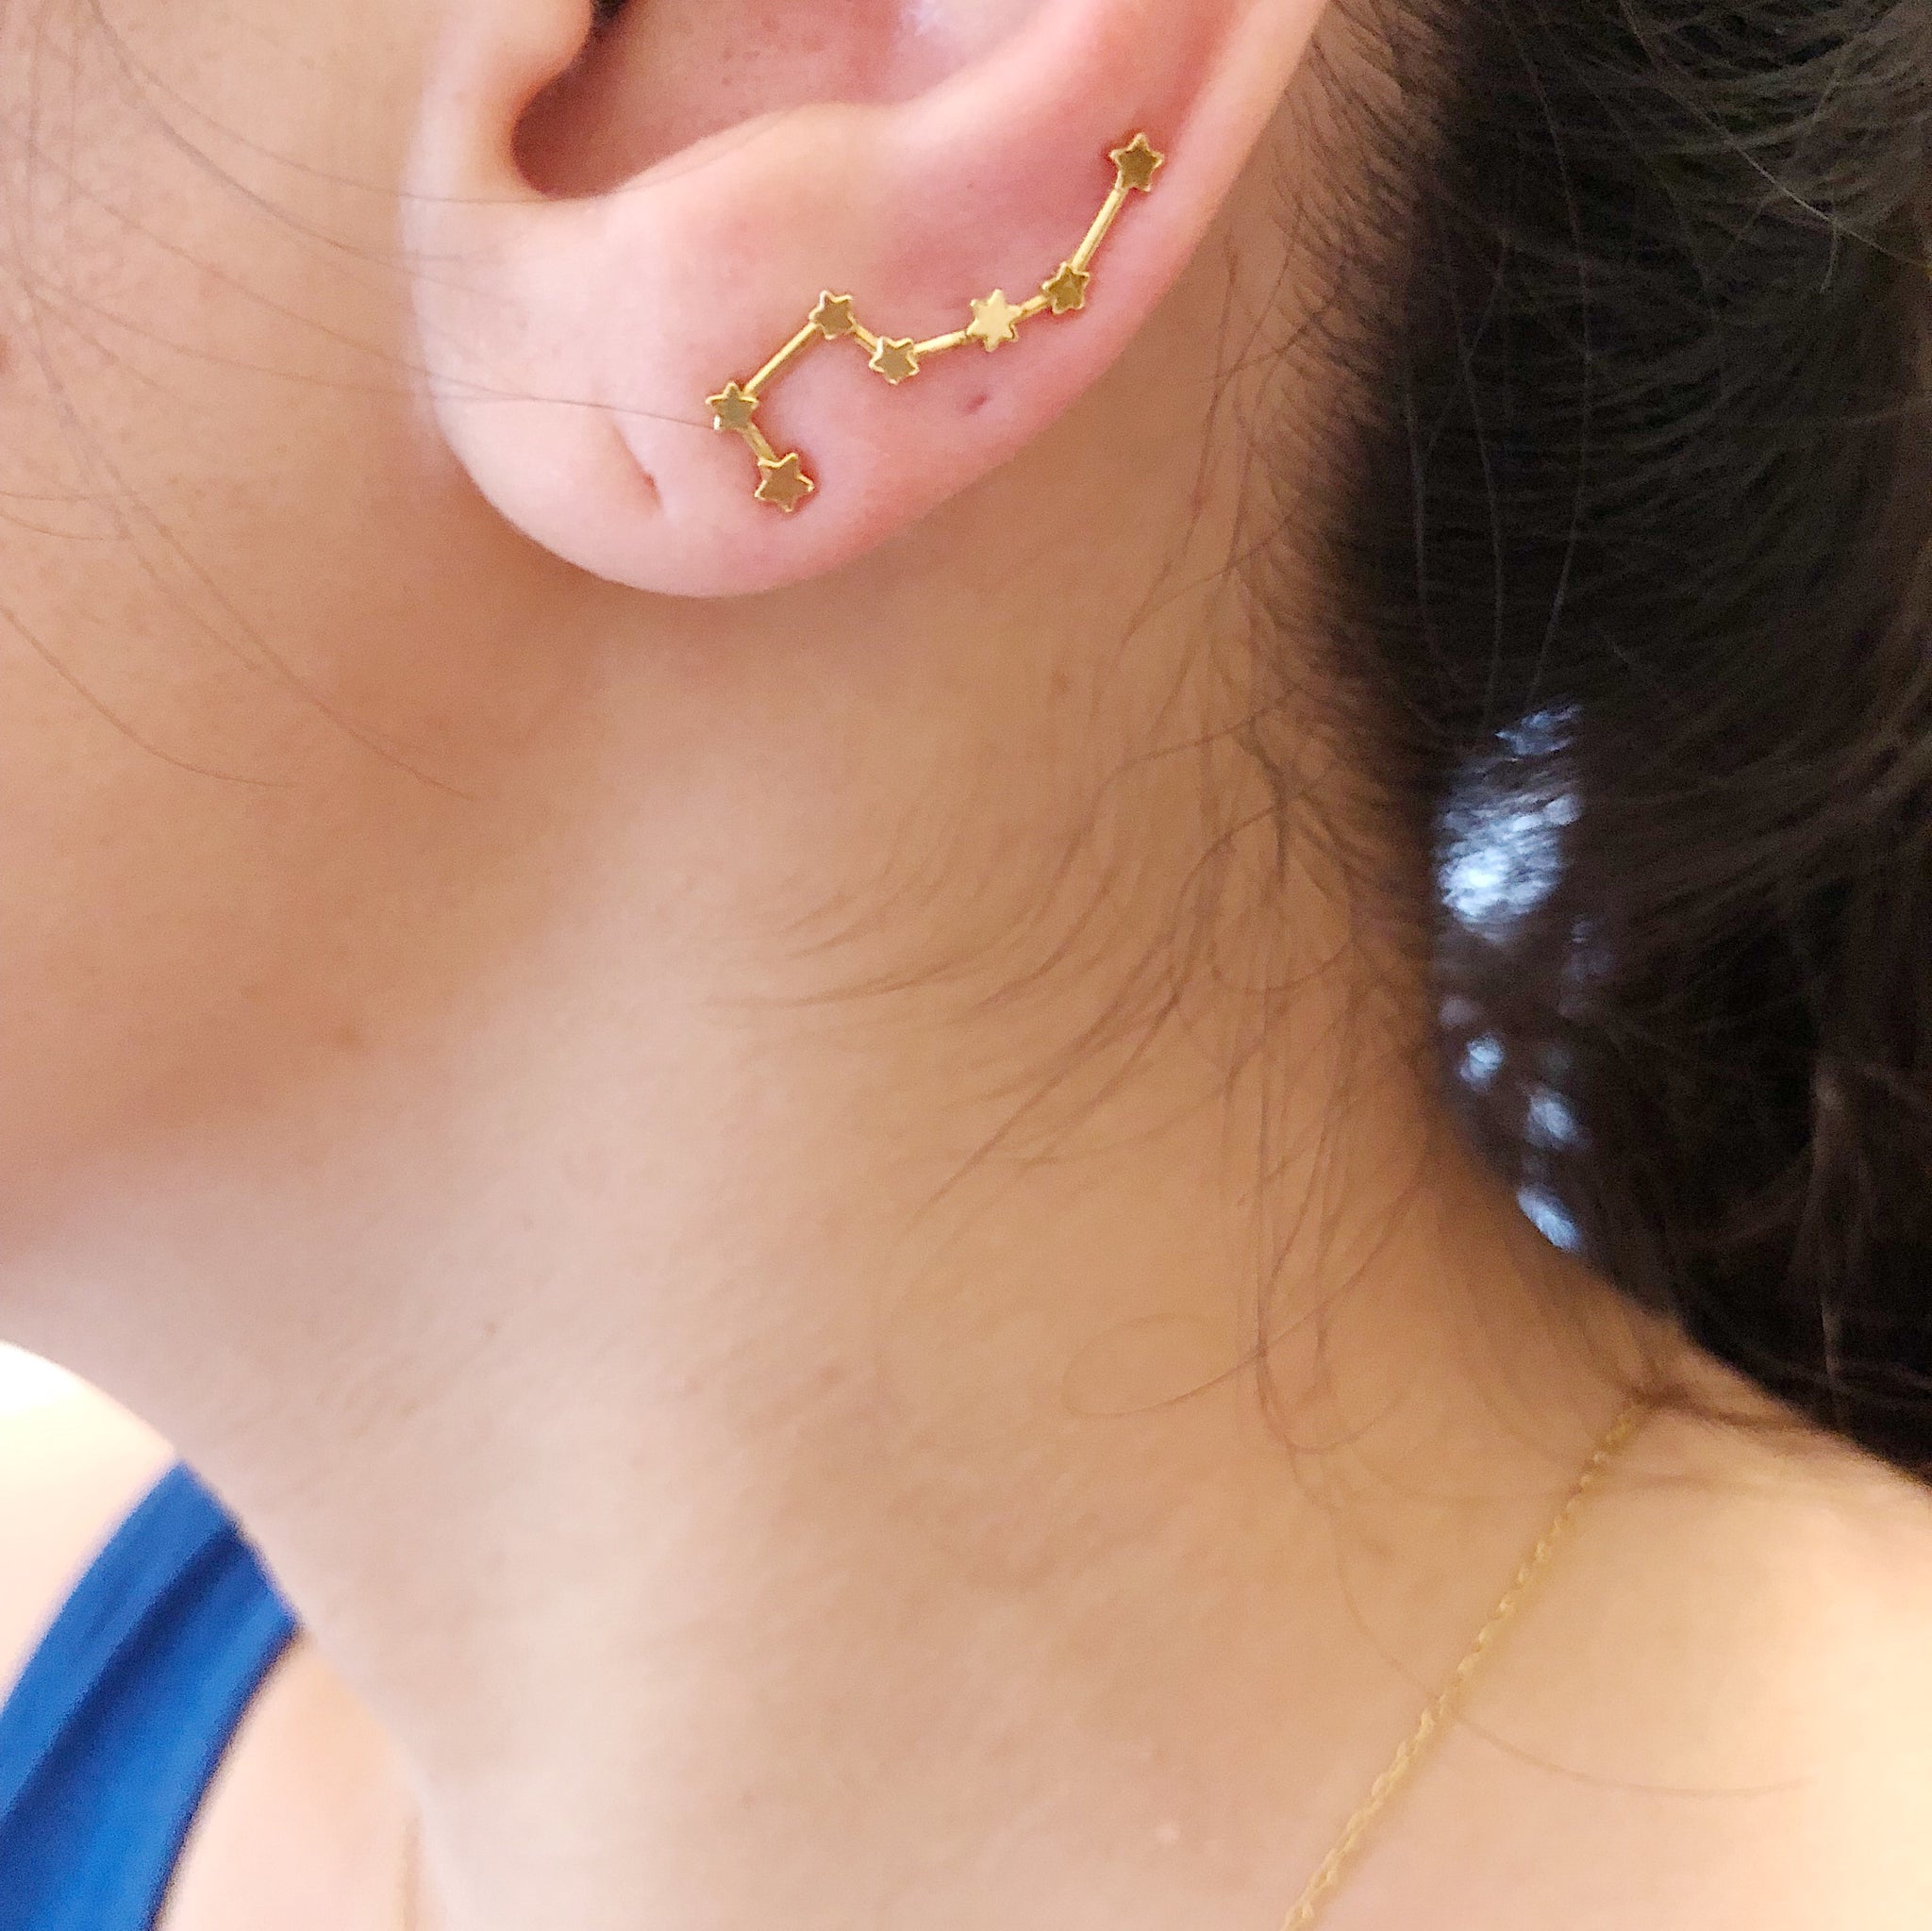 Big Dipper constellation earring (single)